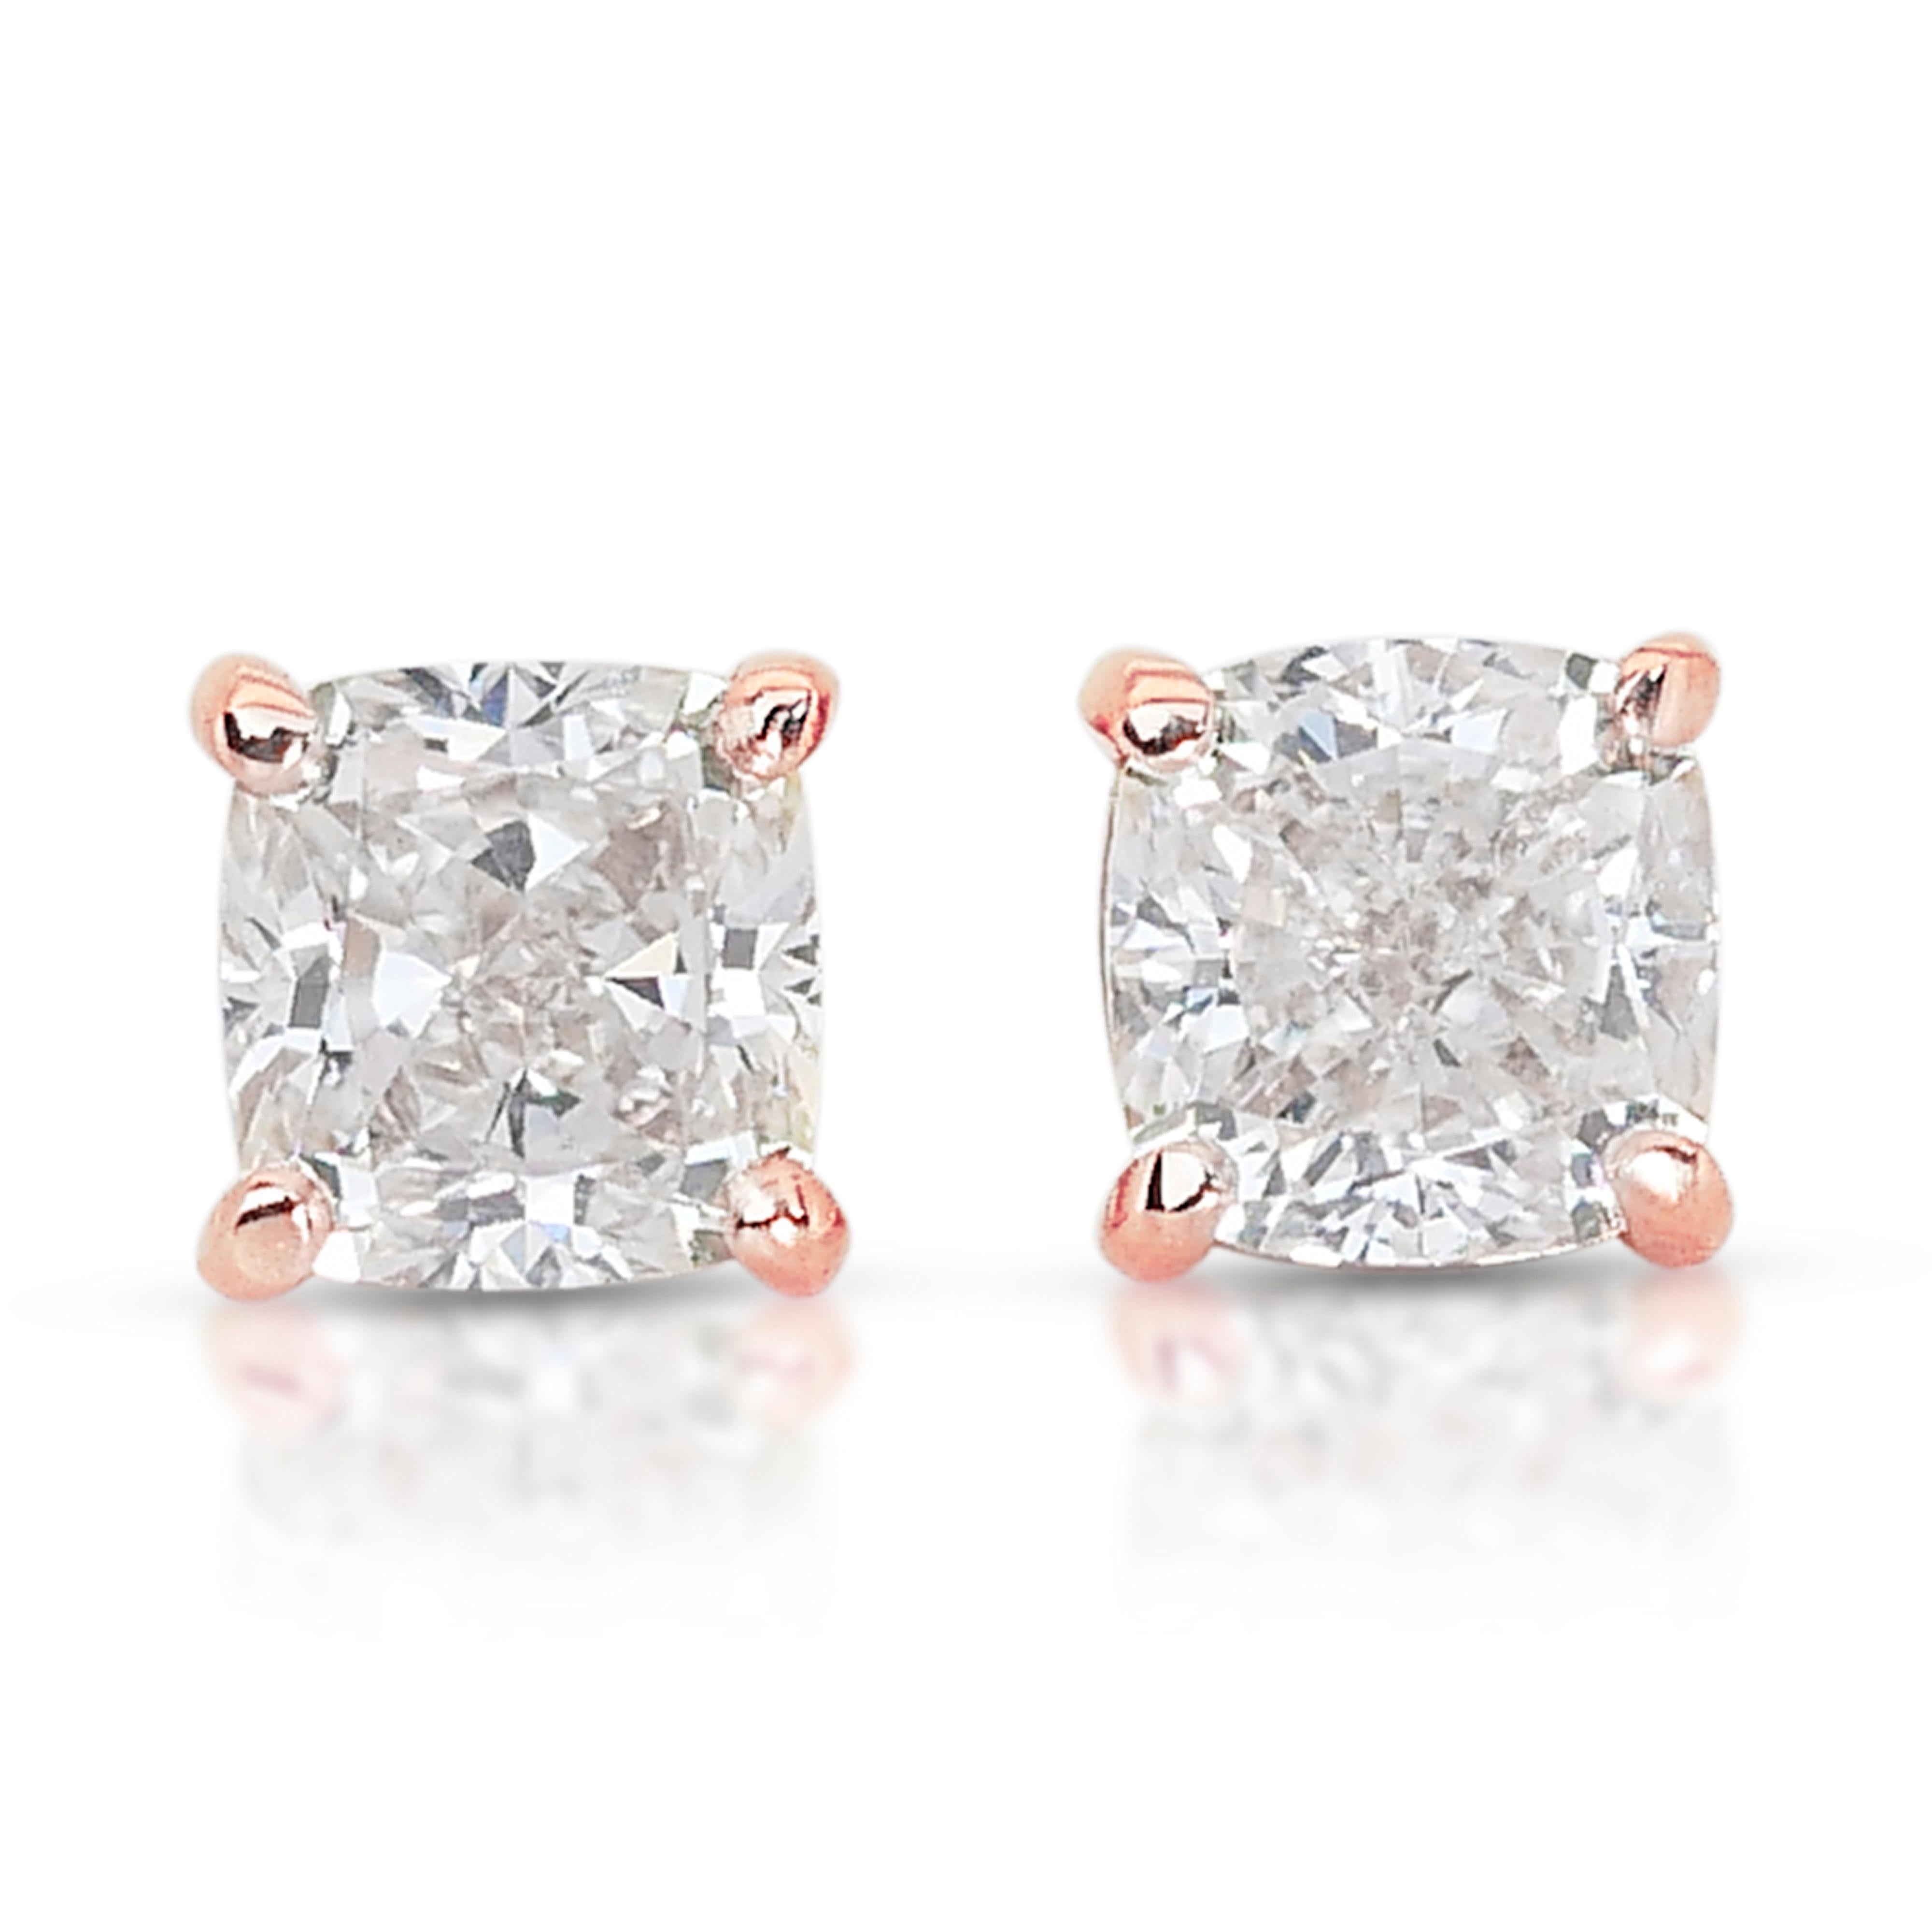 Luxurious 1.68ct Diamond Stud Earrings in 14k Rose Gold - IGI Certified For Sale 3